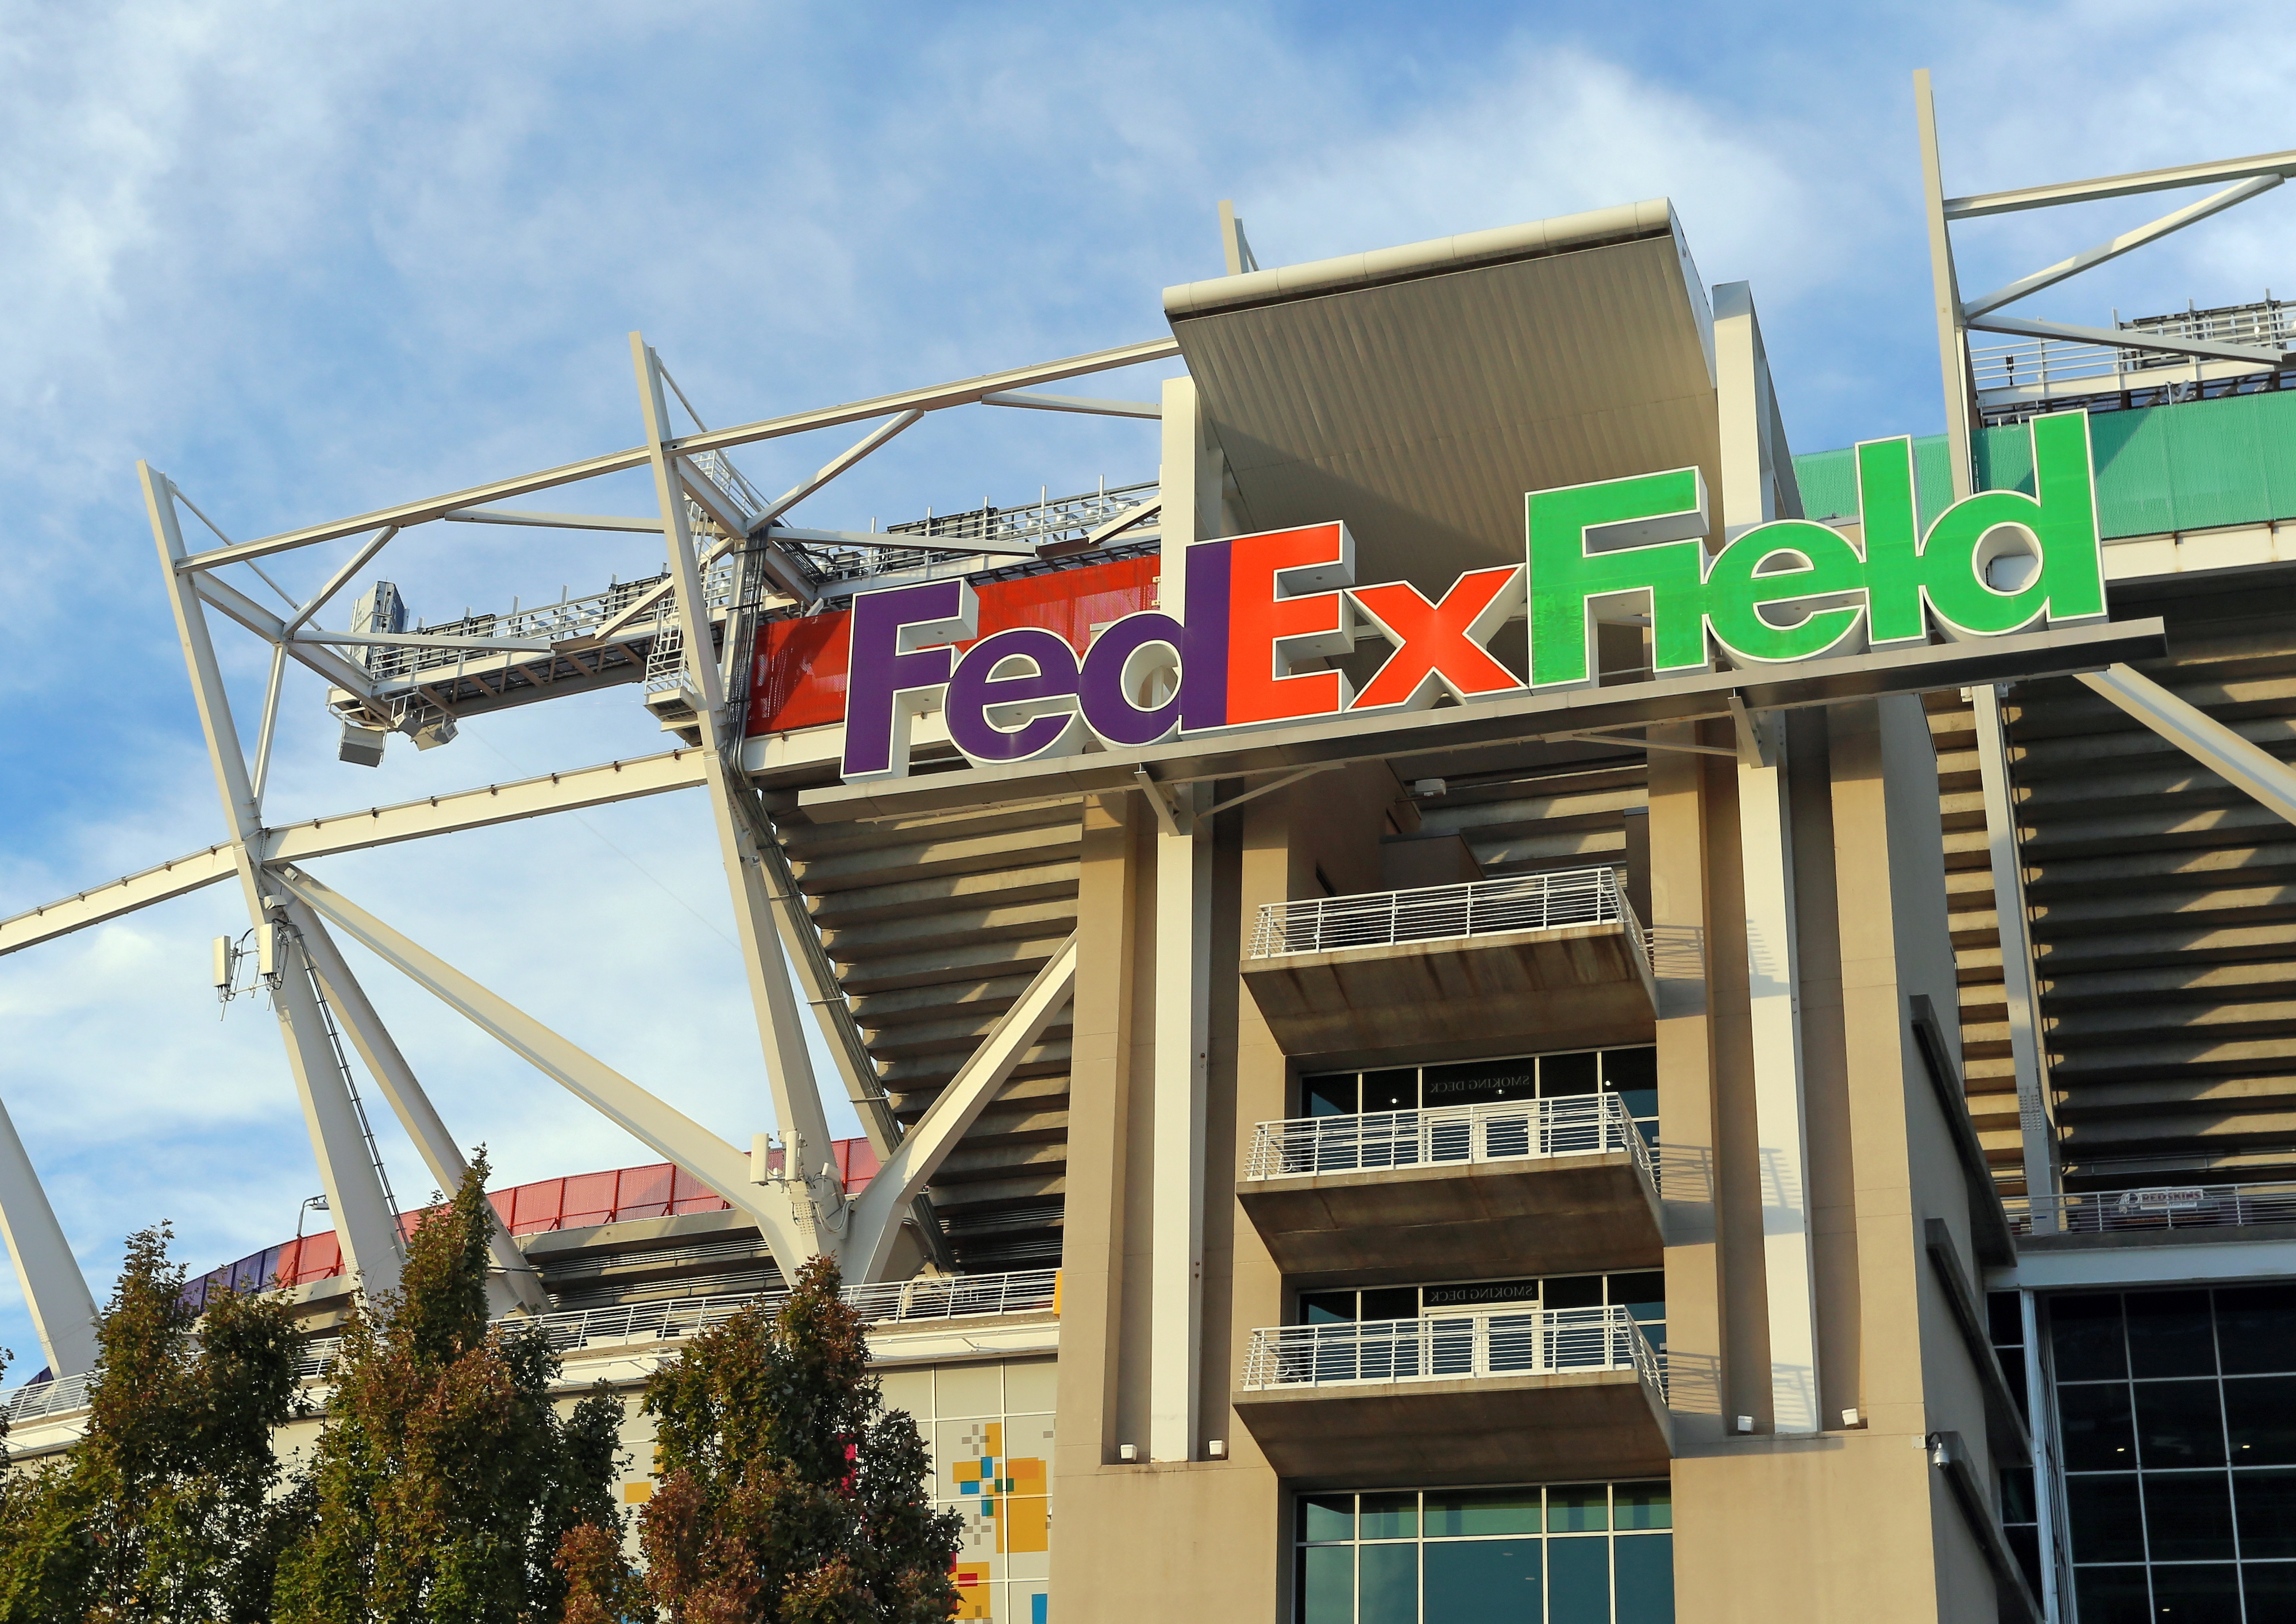 Stadium sponsor FedEx asks Redskins to change nickname - ESPN